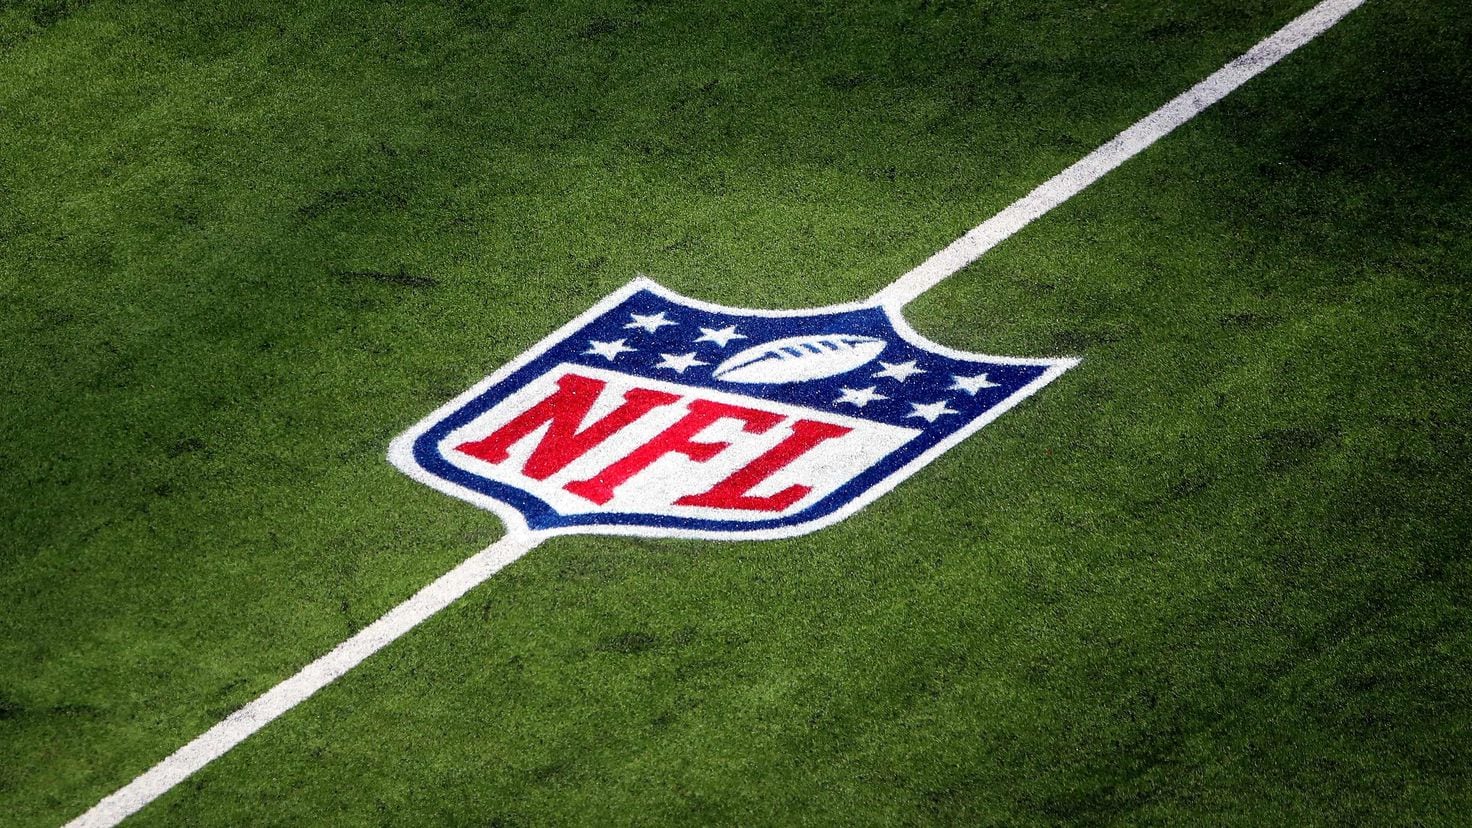 2023 NFL regular season schedule: Monday Night Football